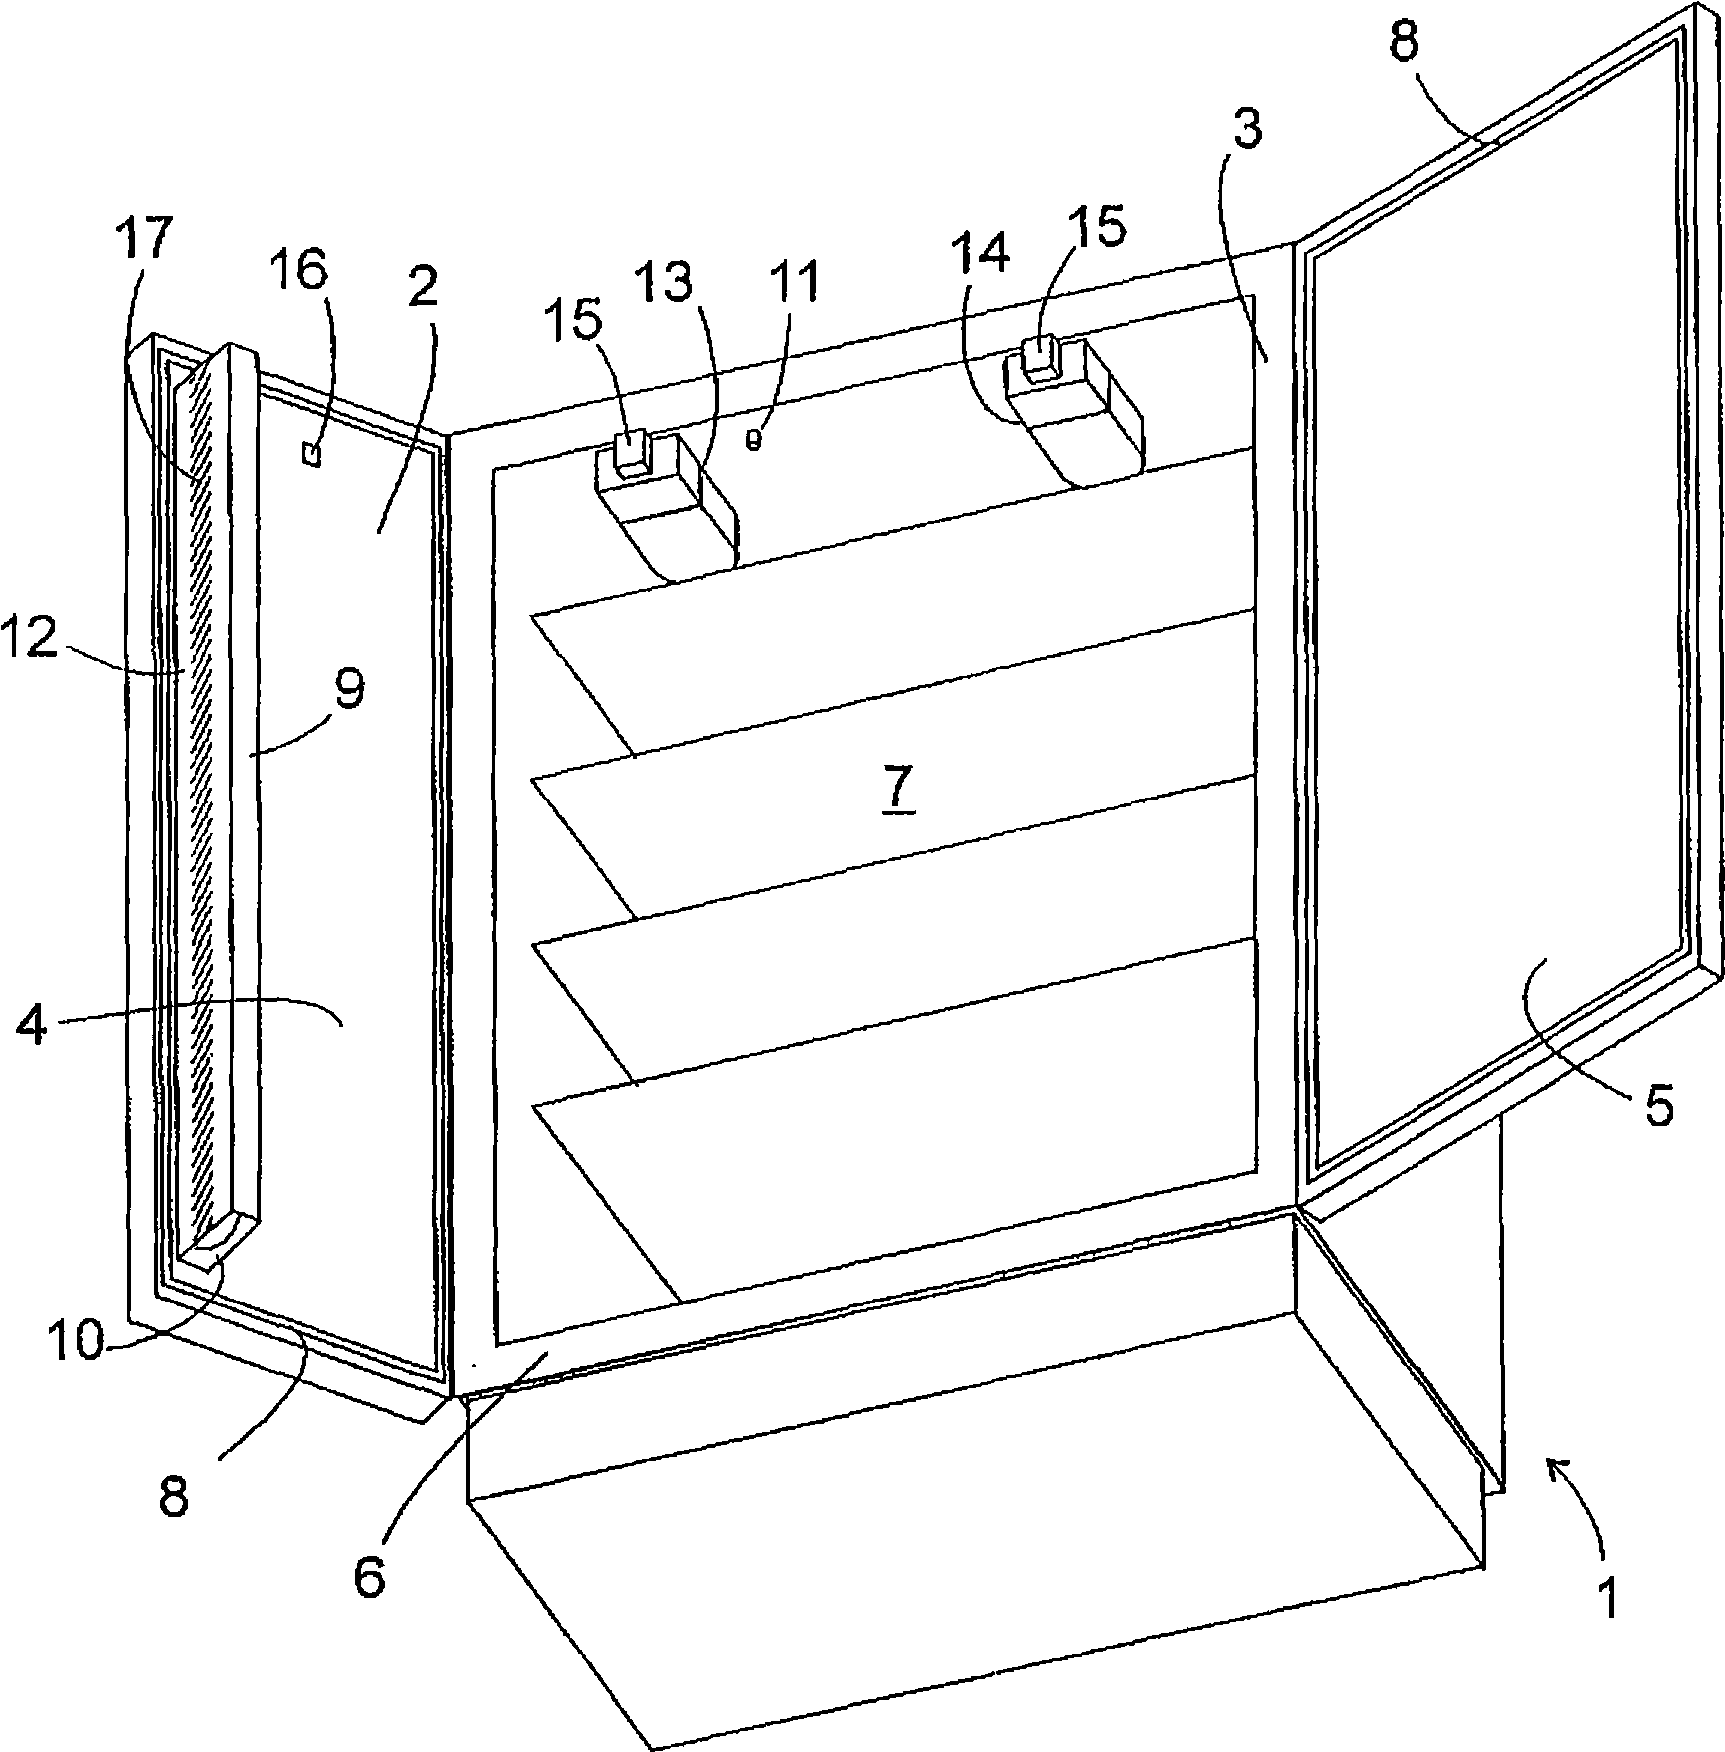 Multi-door refrigerator comprising a heatable door bar